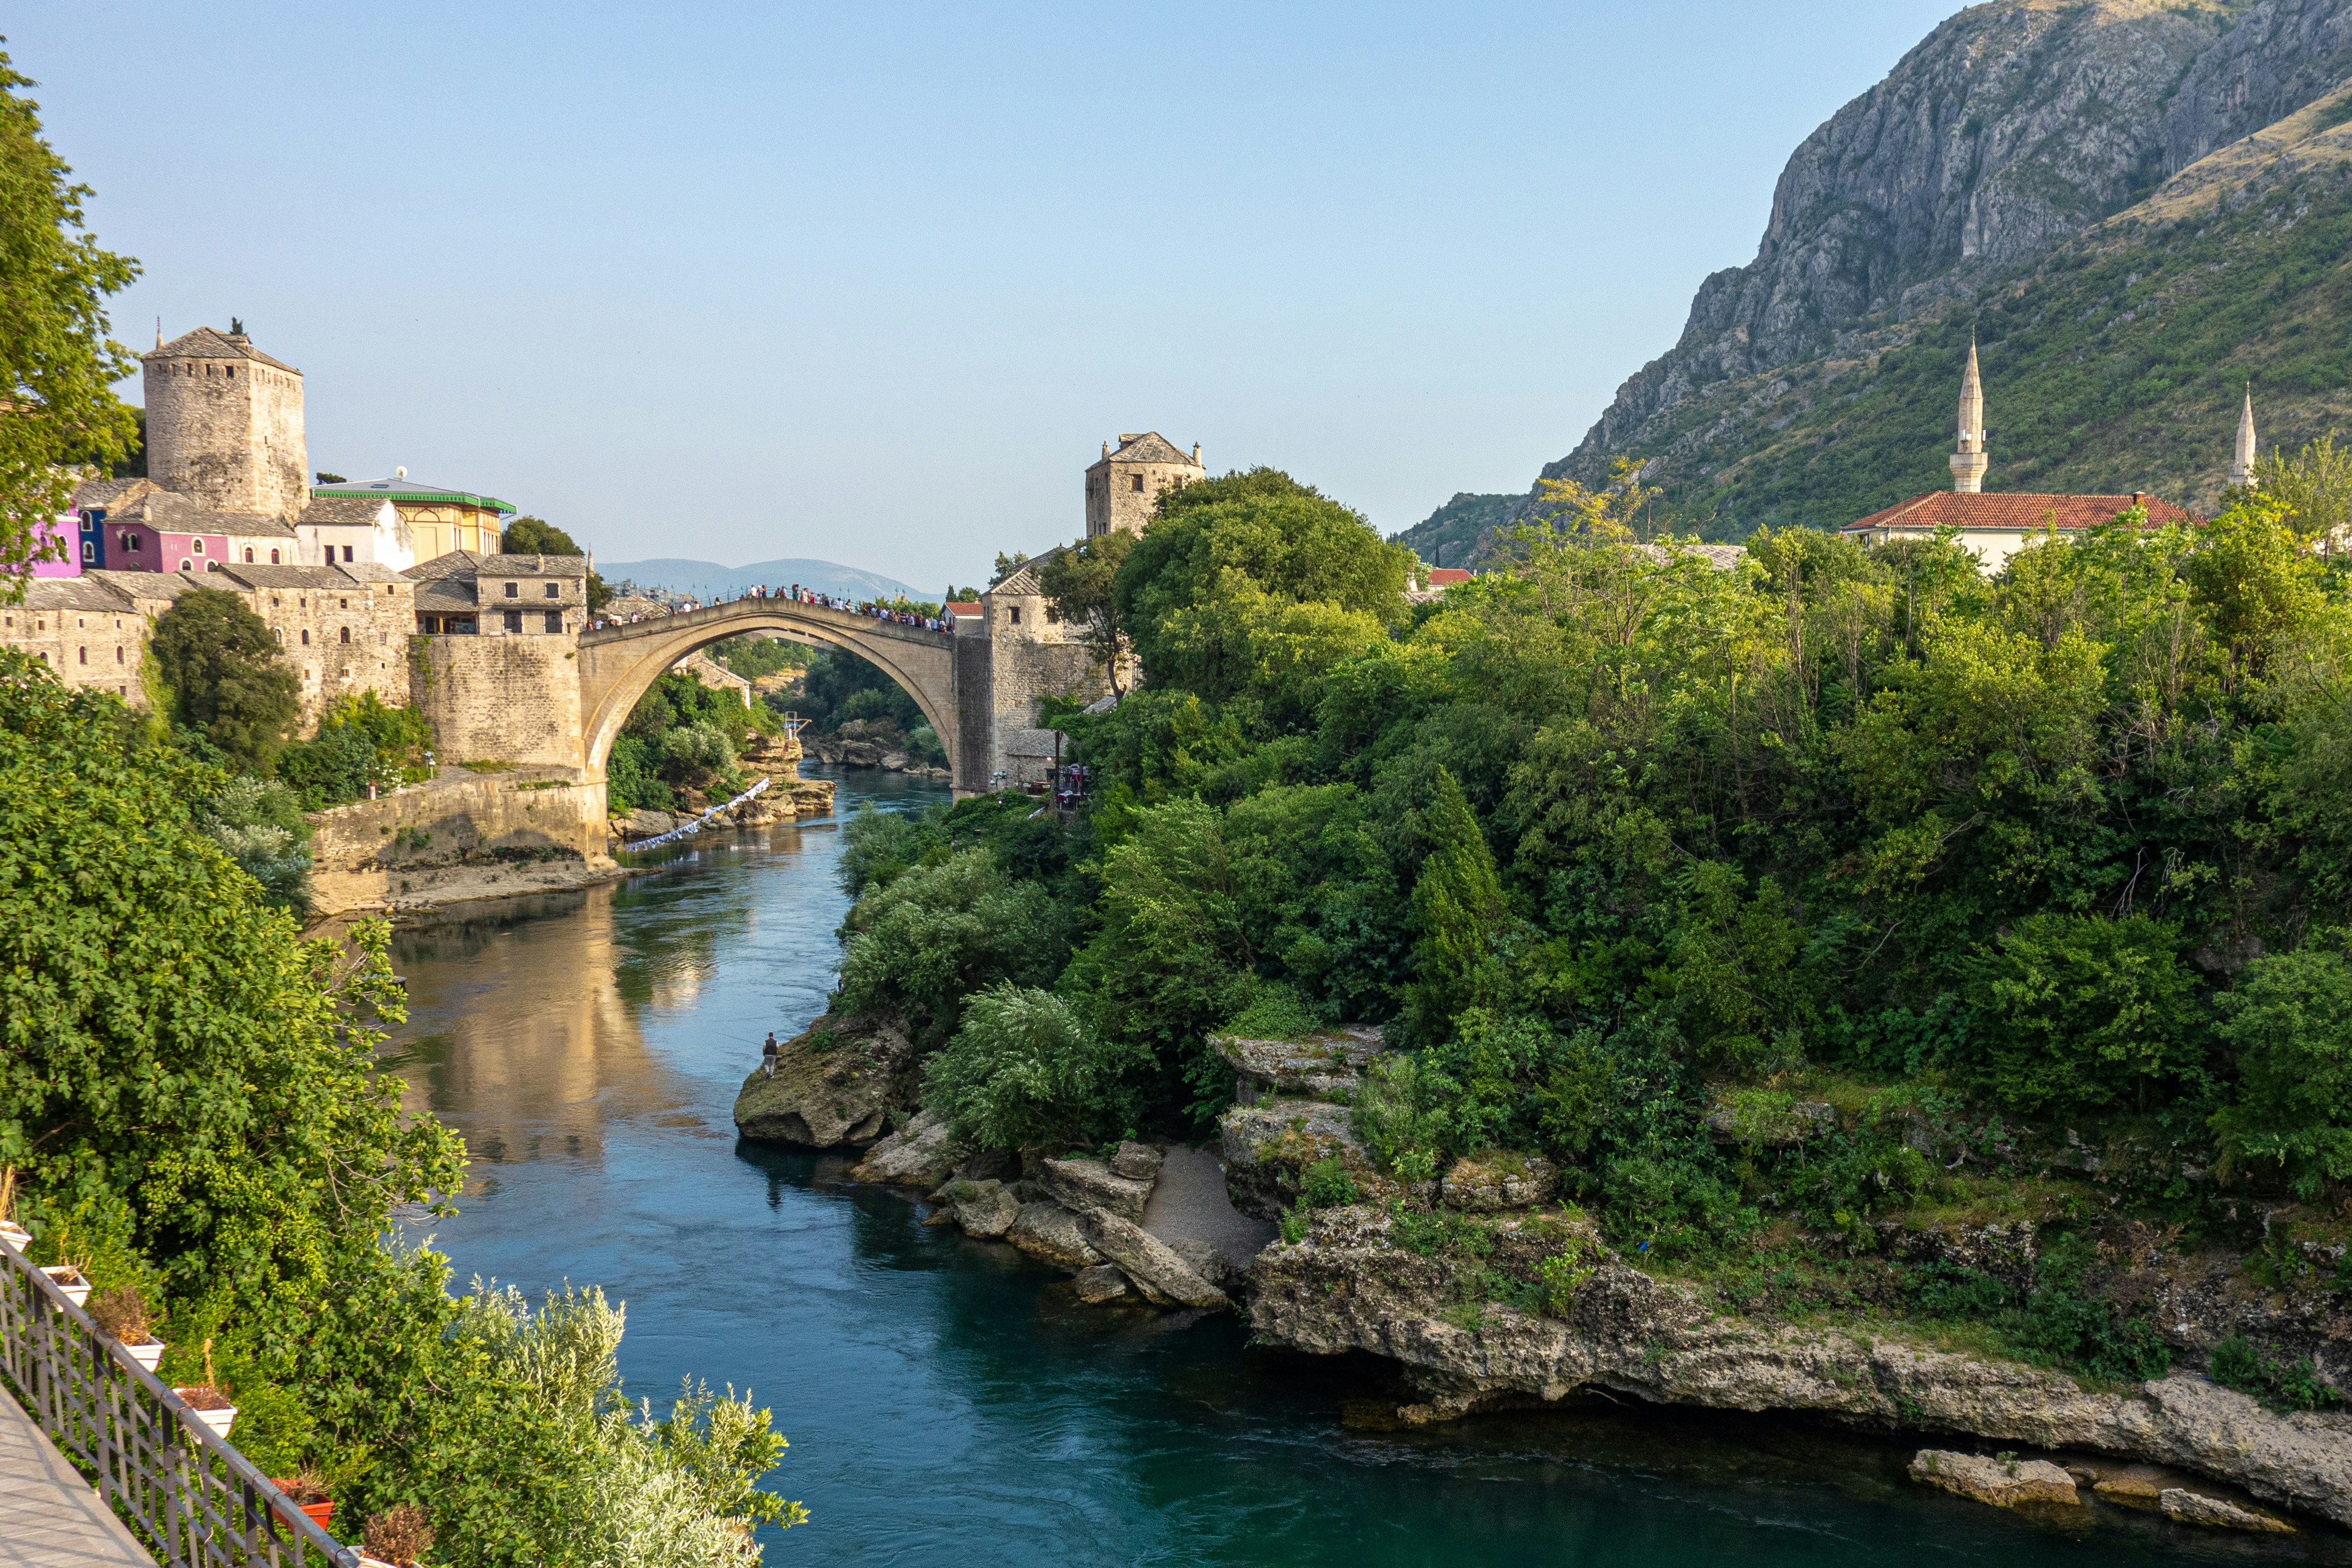 Stari Most, the famous bridge in Mostar, Bosnia and Herzegovina.